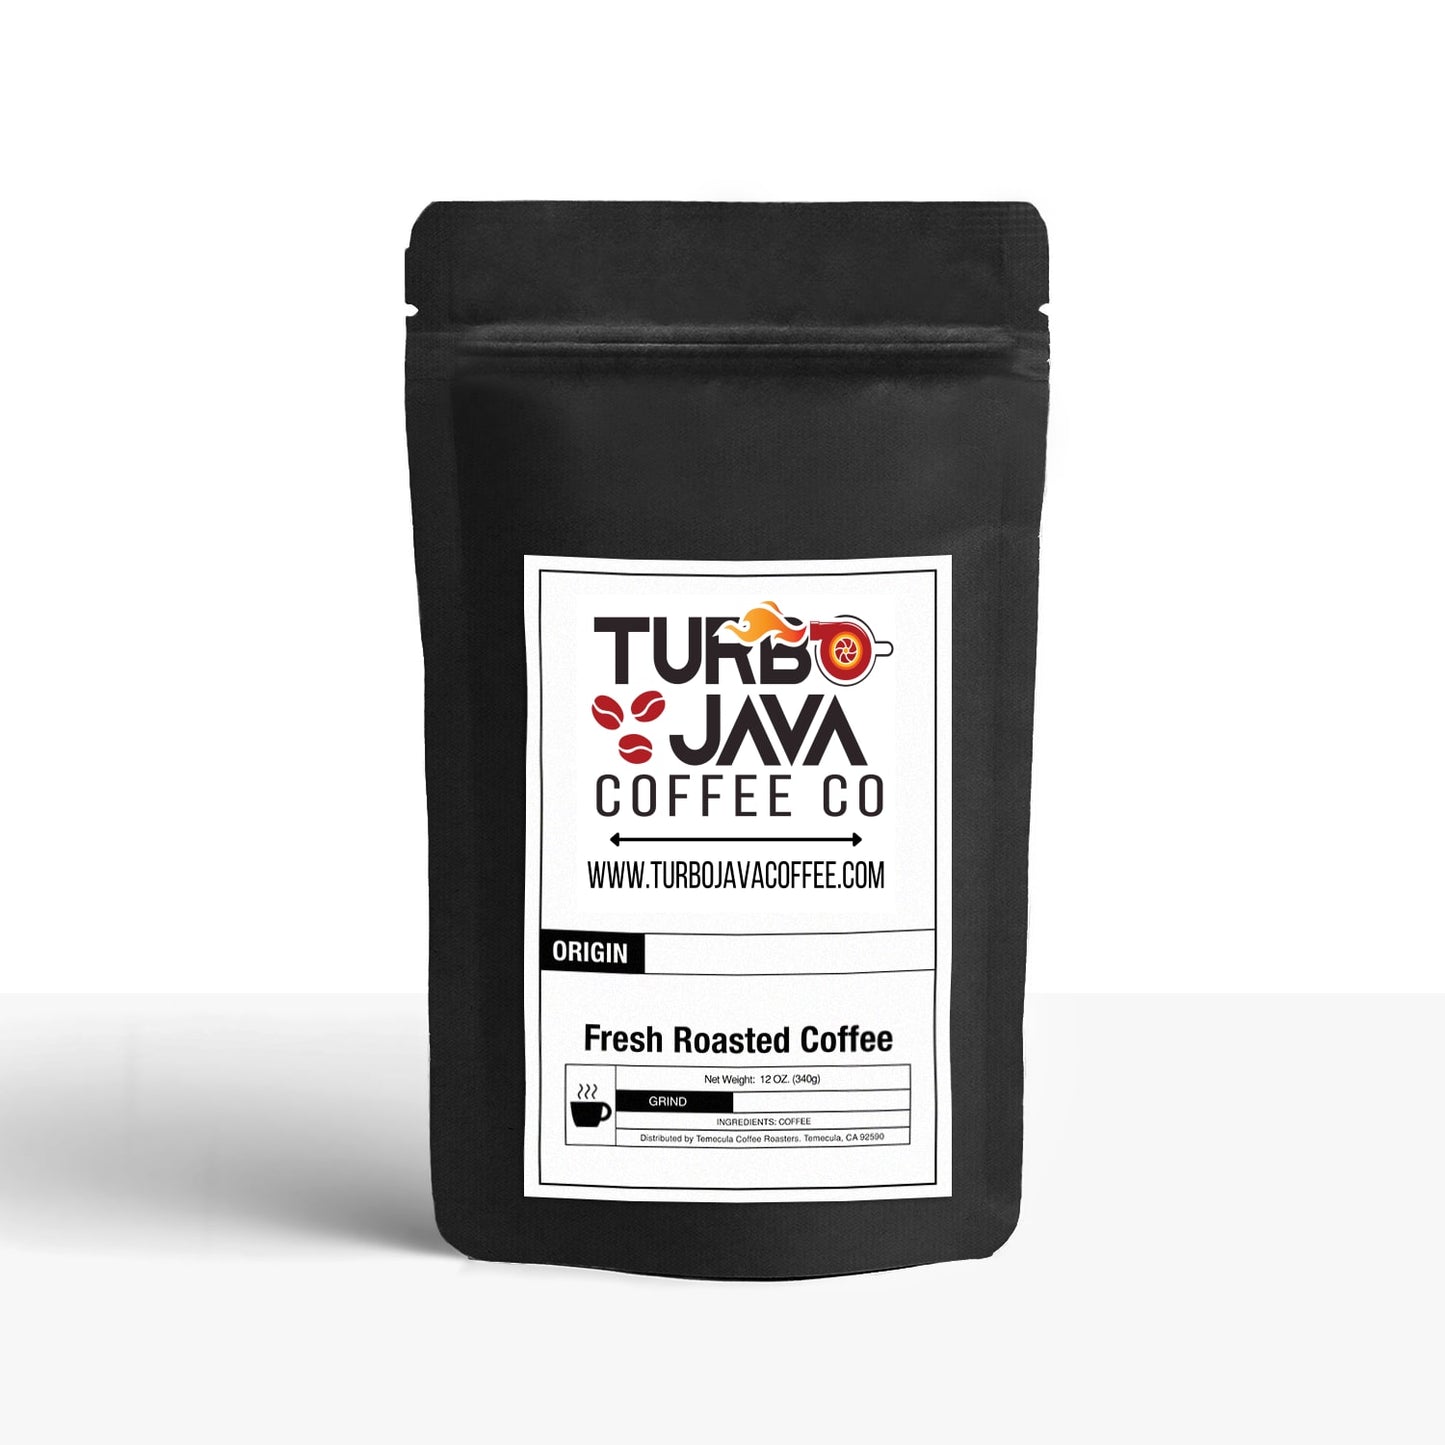 Turbo Java Coffee Co. French Roast Coffee 1 lb / Standard,1 lb / Espresso,1 lb / Whole Bean,2 lb / Standard,2 lb / Espresso,2 lb / Whole Bean,5 lb / Standard,5 lb / Espresso,5 lb / Whole Bean,12 oz / Standard,12 oz / Espresso,12 oz / Whole Bean